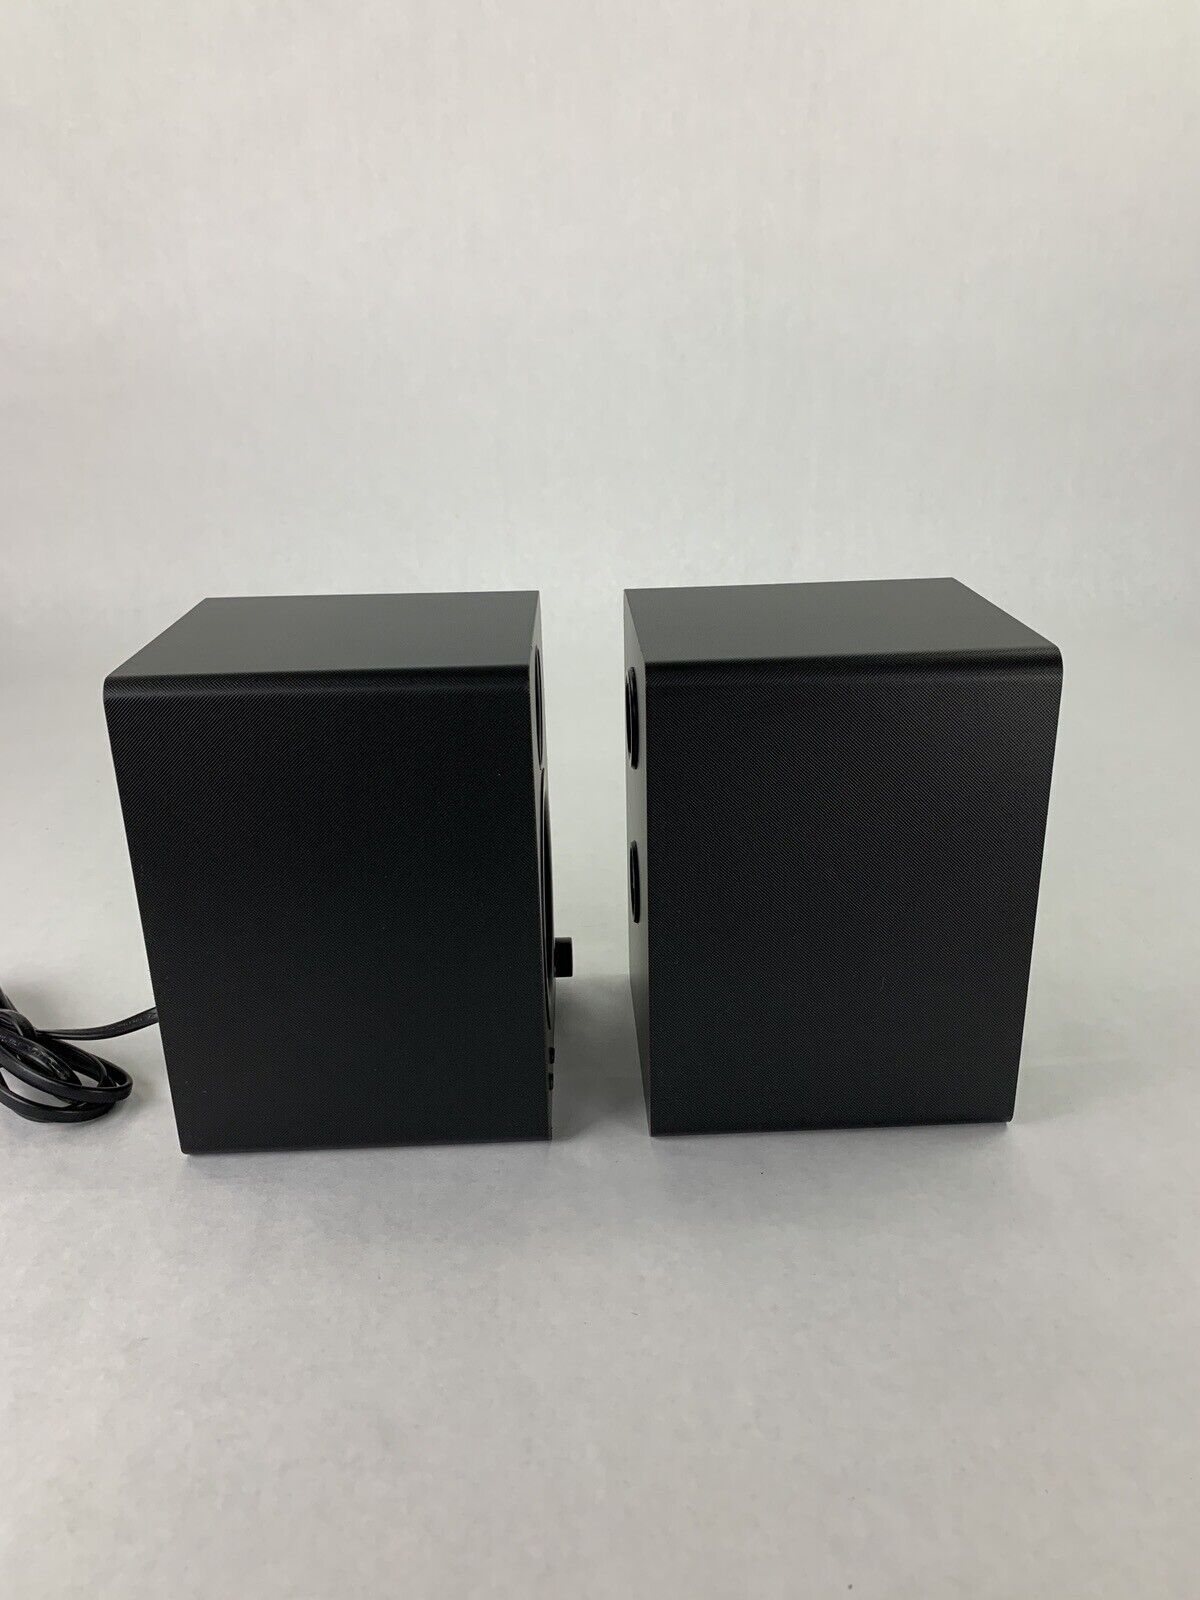 Monoprice DT-3 50-Watt Multimedia Desktop Powered Speakers Tested